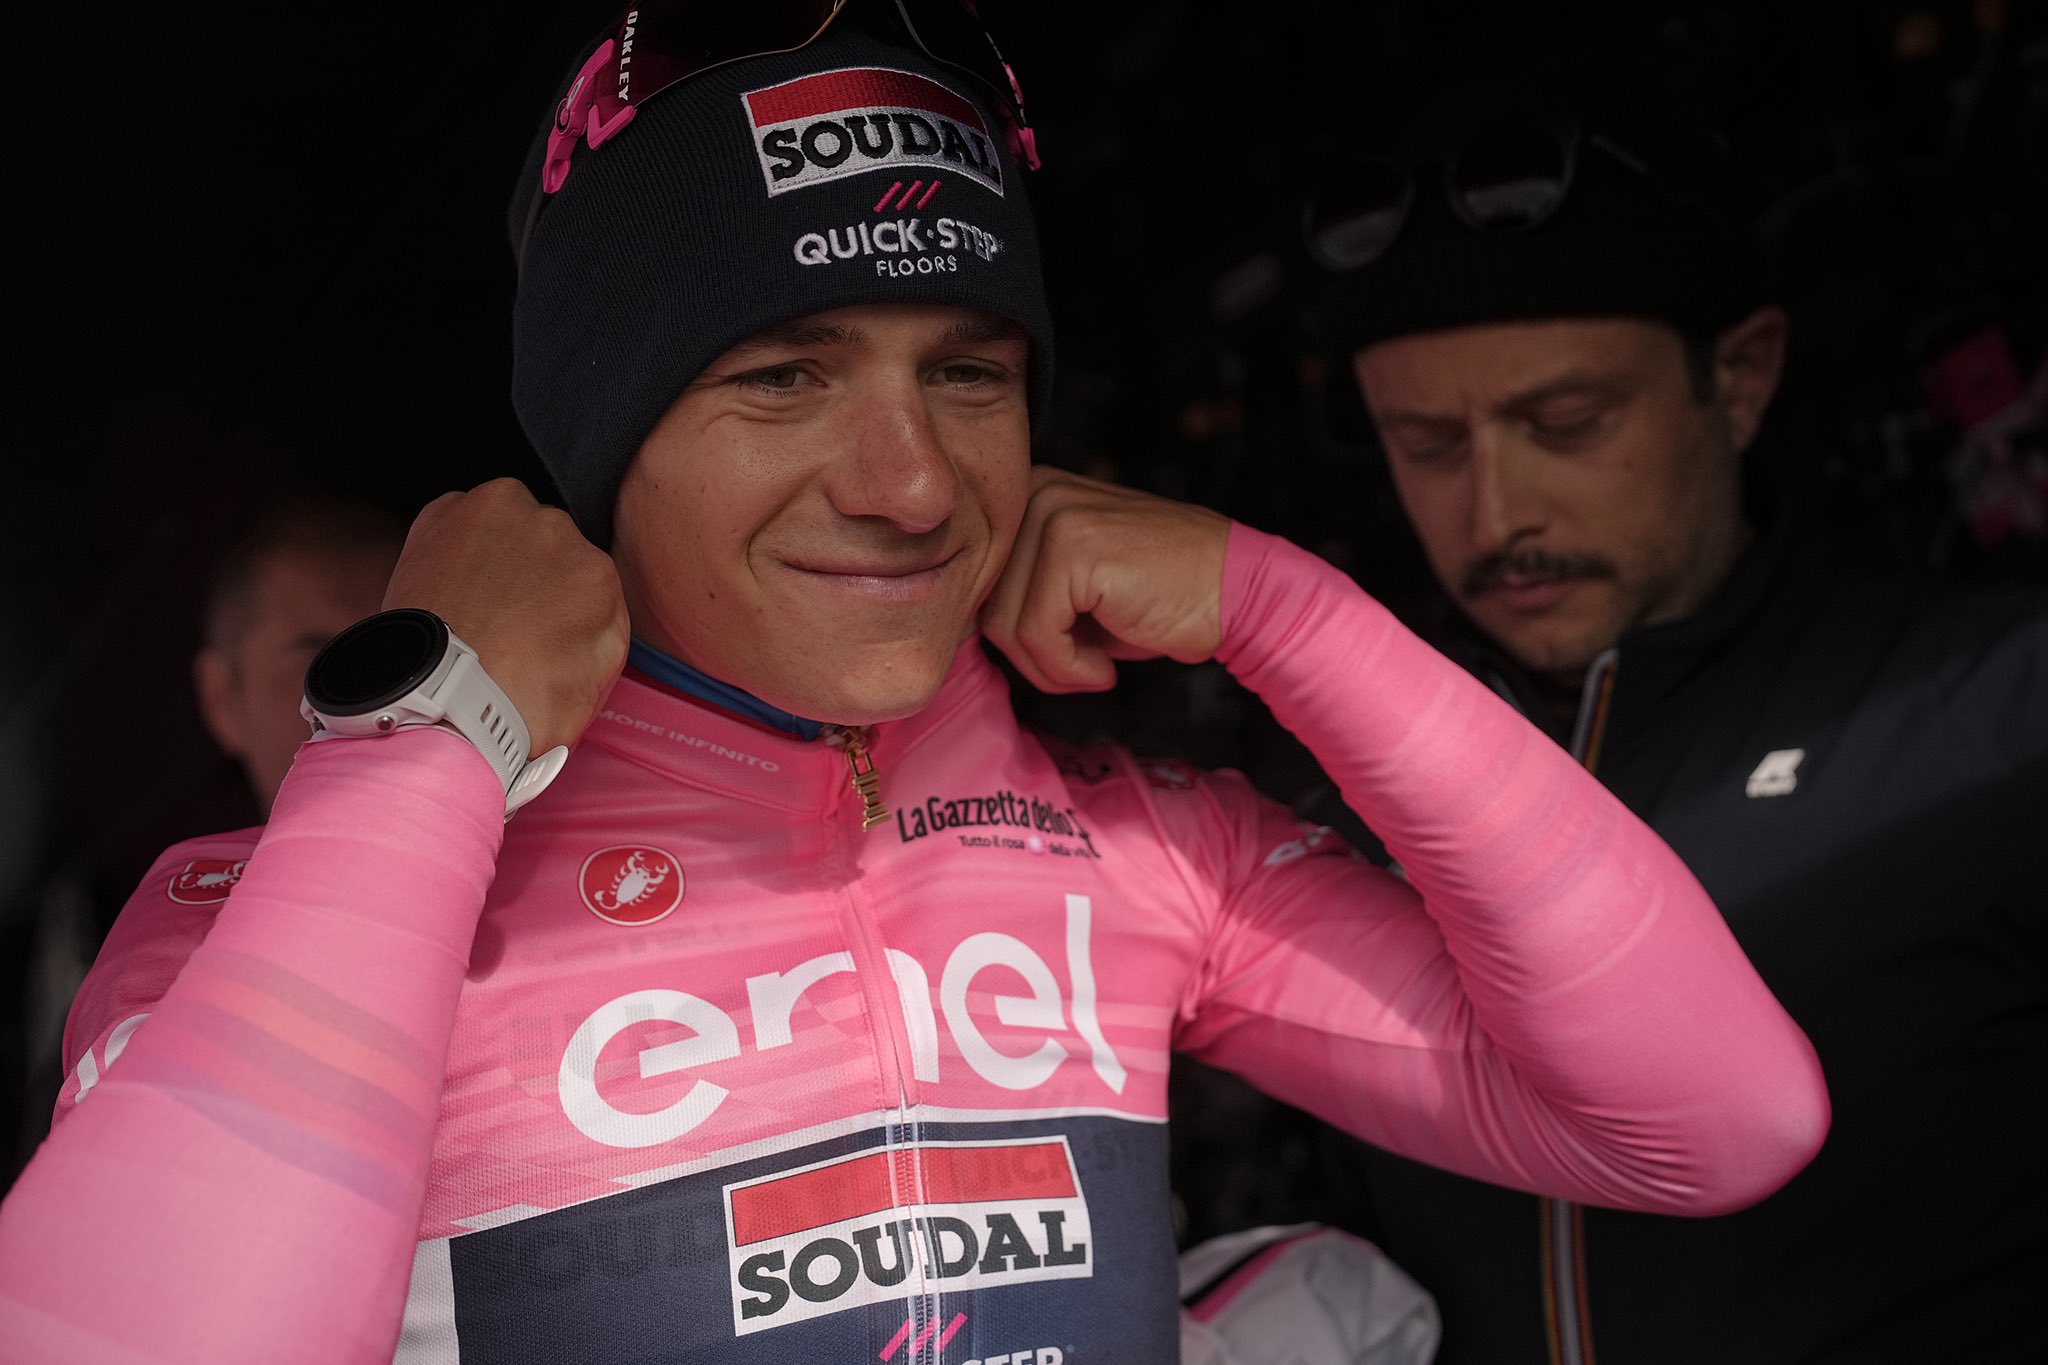 fonte immagine: Twitter ufficiale Giro d’Italia